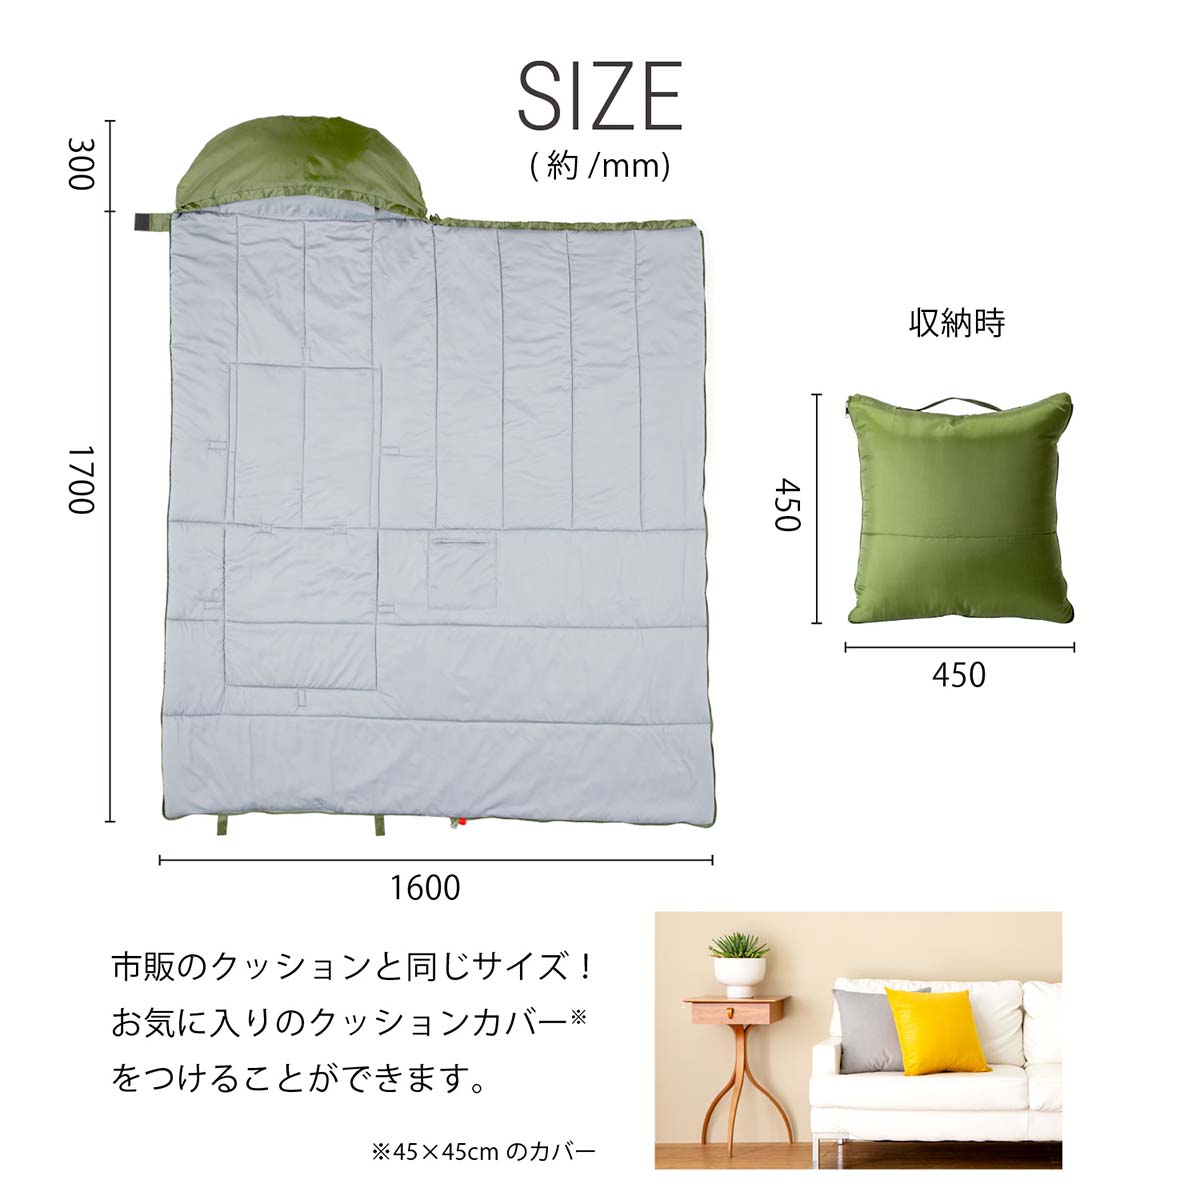 SONAENO クッション型多機能寝袋